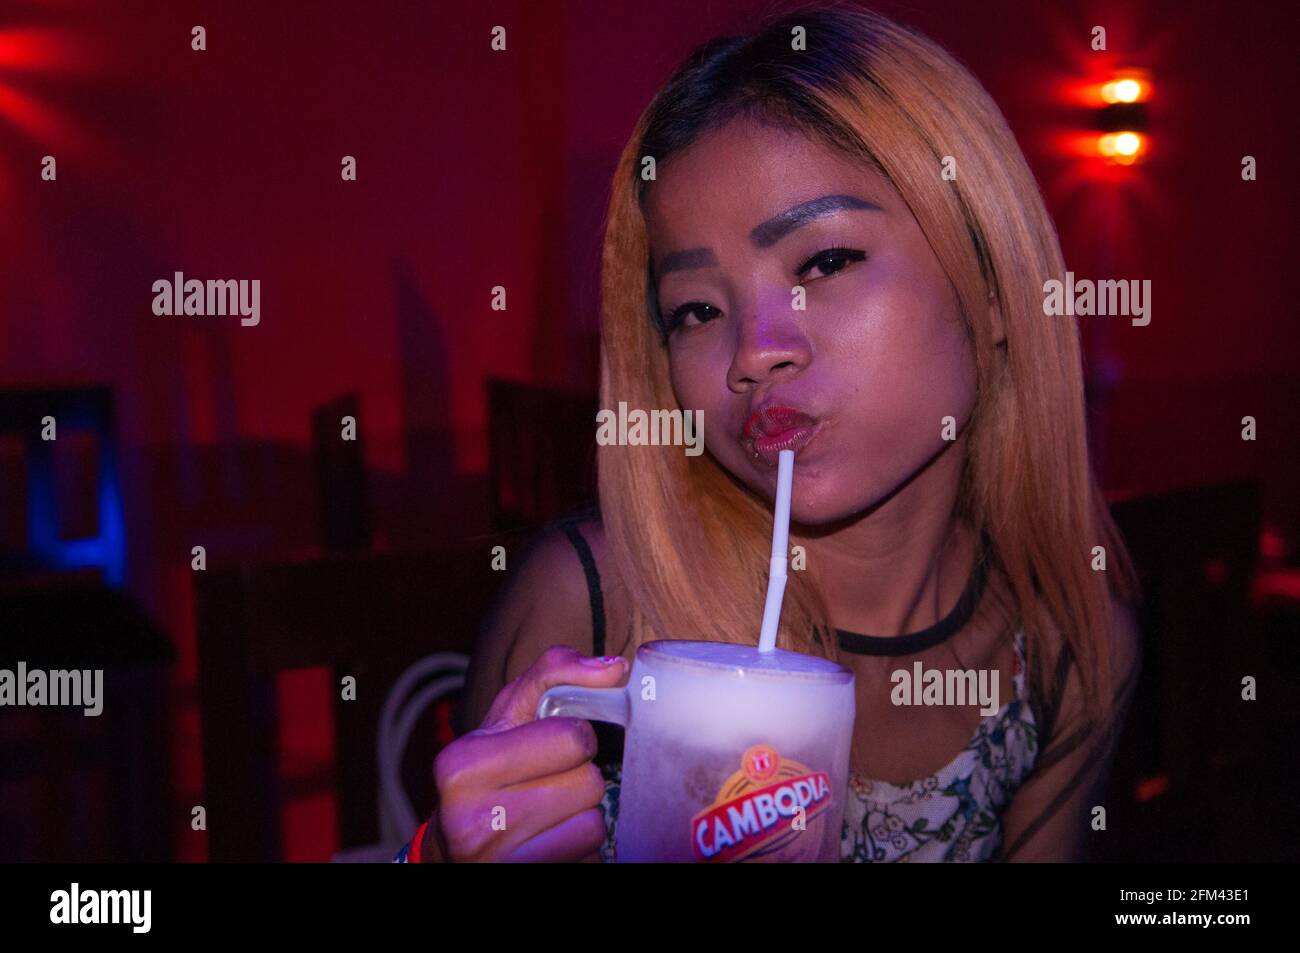 cambodian bar girl photos free pics gallery